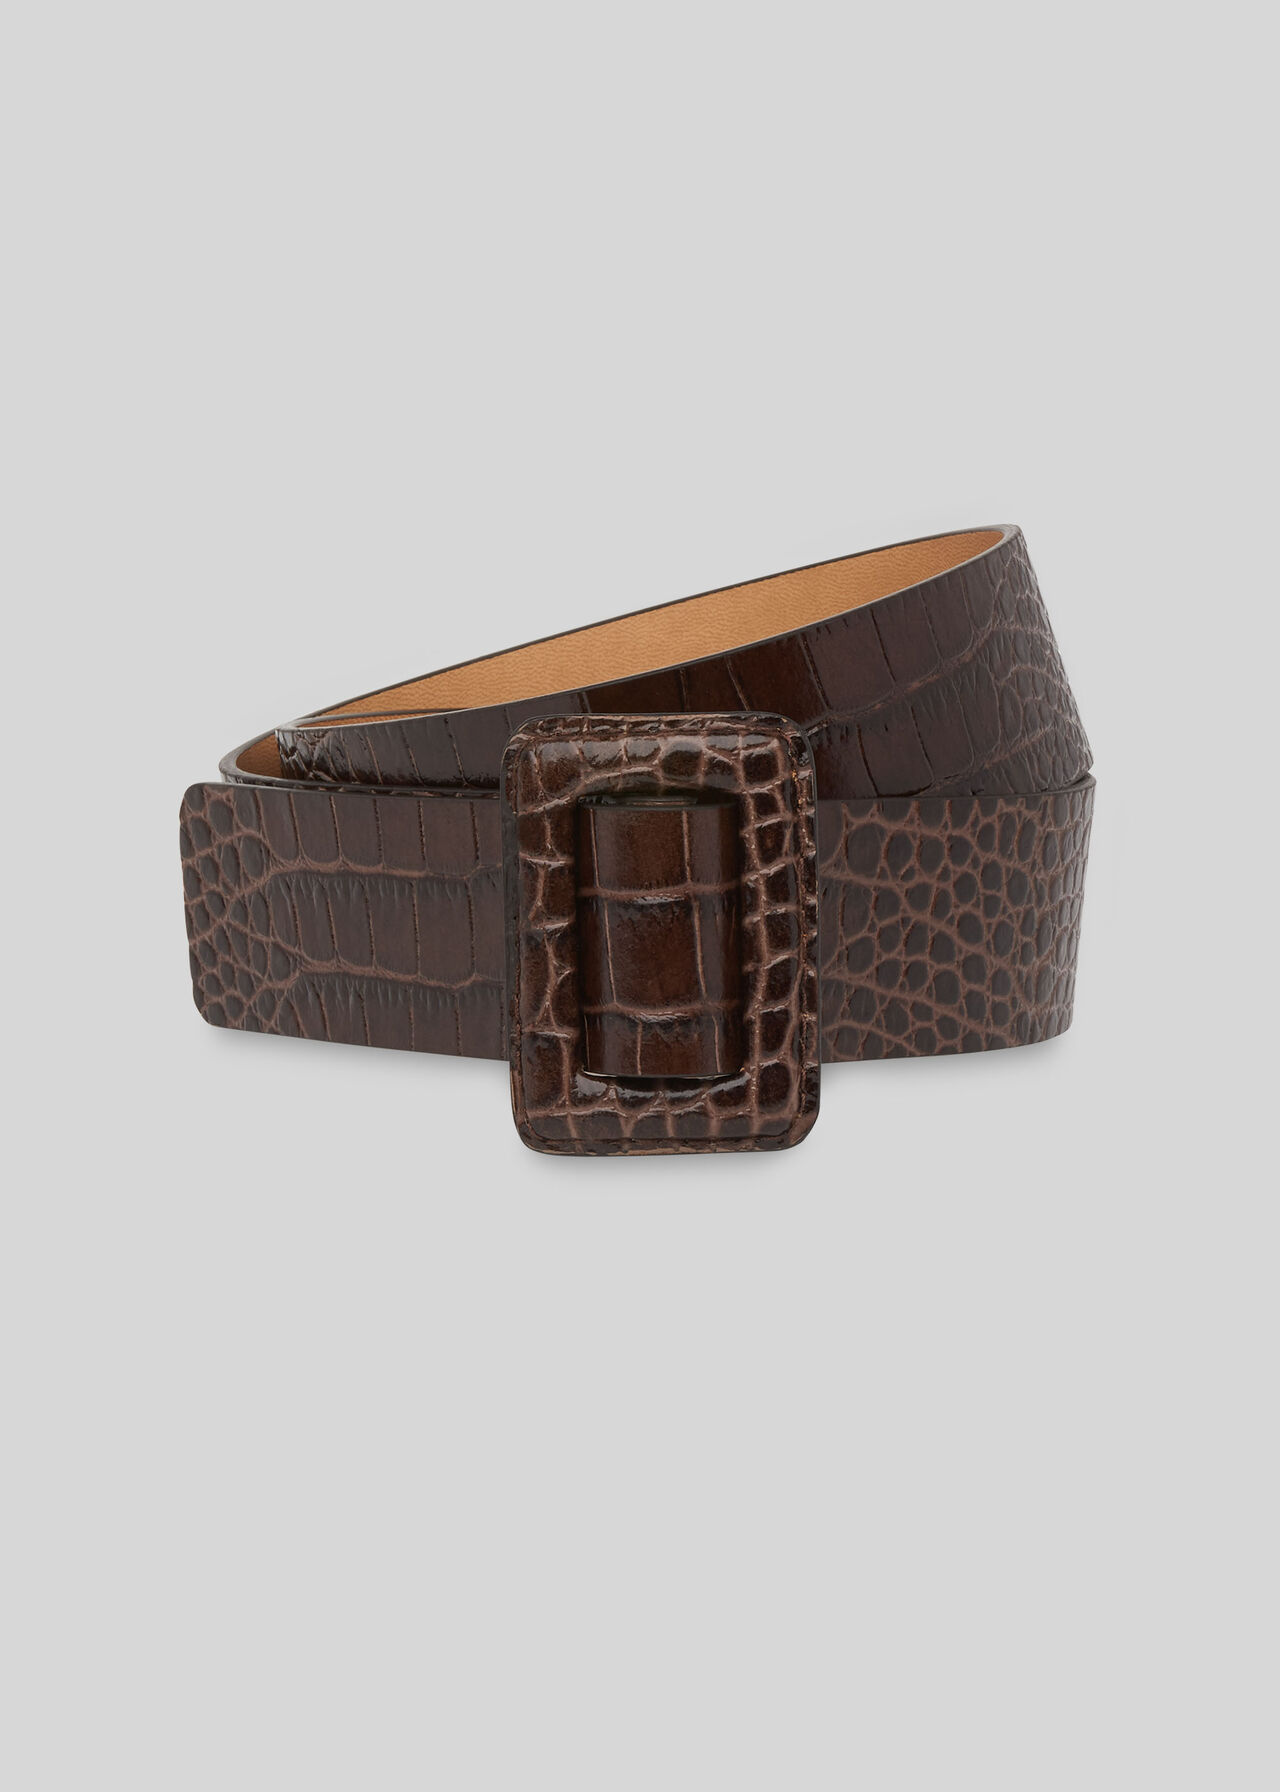 Croc Leather Belt Brown